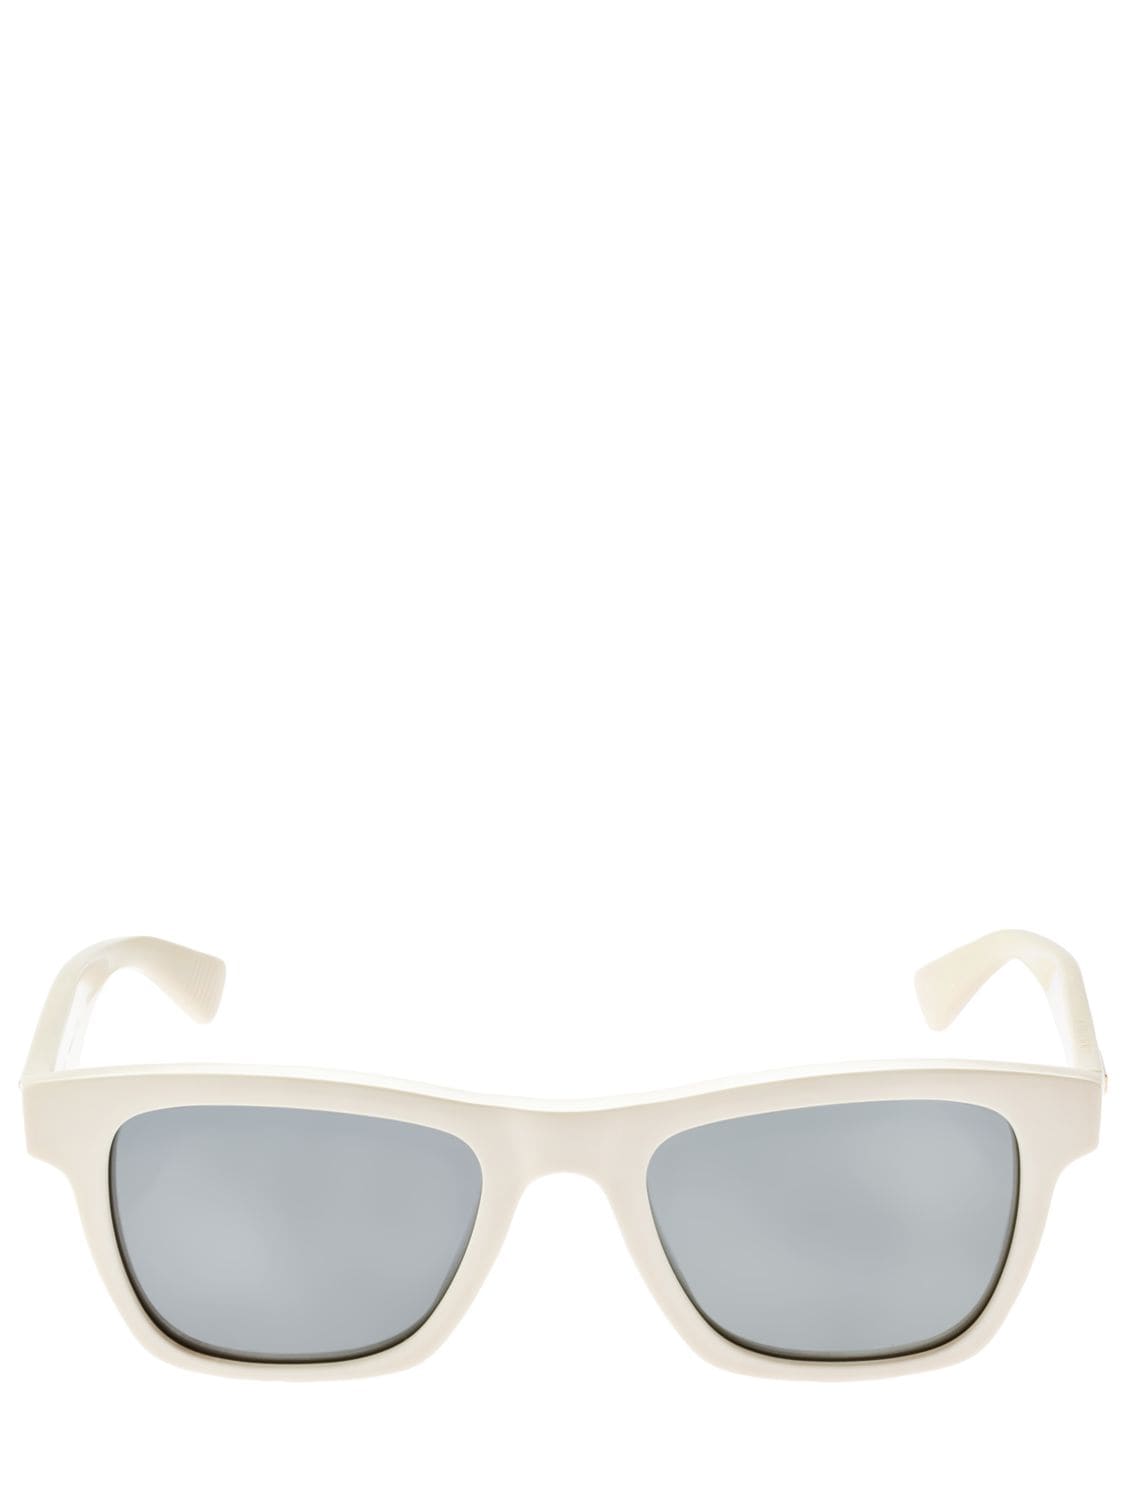 Bottega Veneta Squared Acetate Sunglasses In Ivory,grey